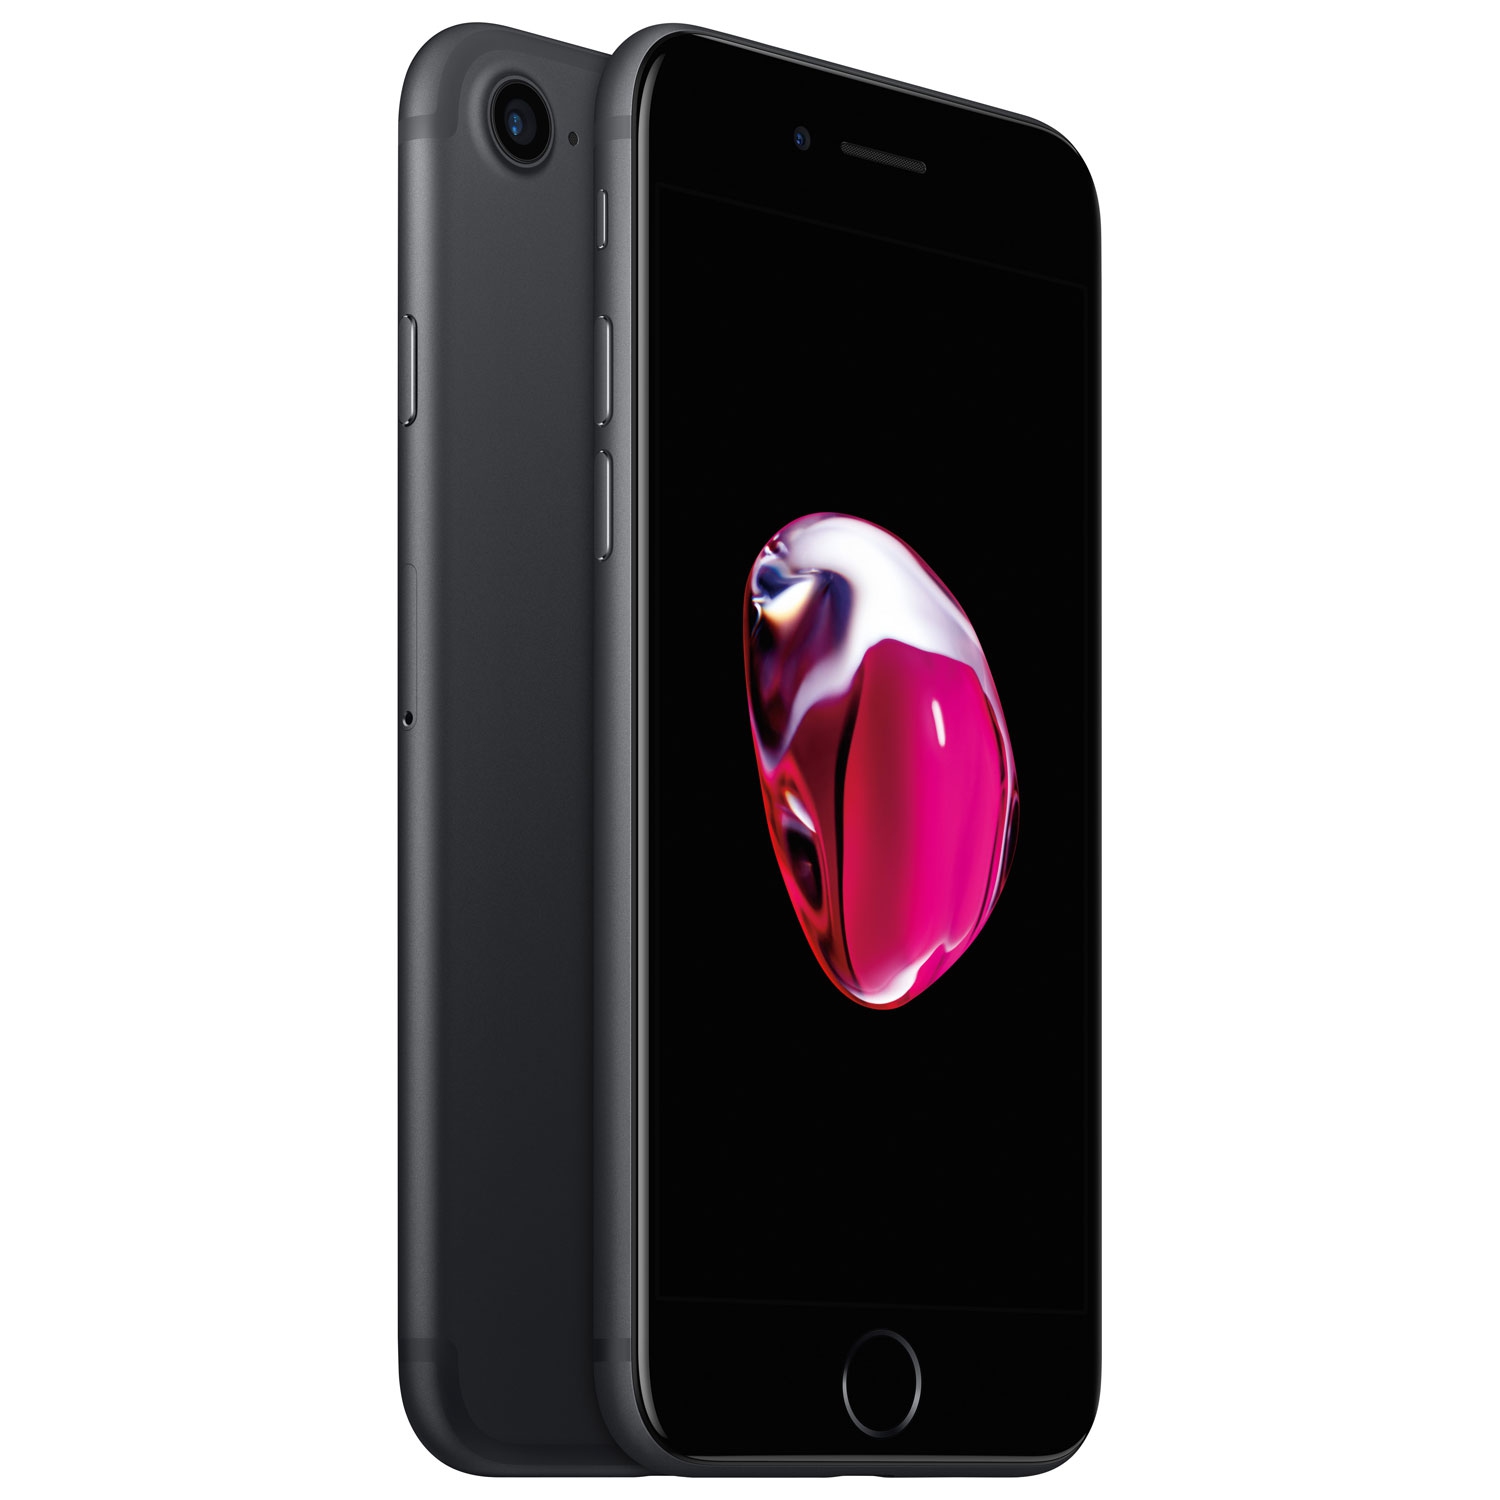 Refurbished (Good) - Apple iPhone 7 128GB Smartphone - Black - Unlocked